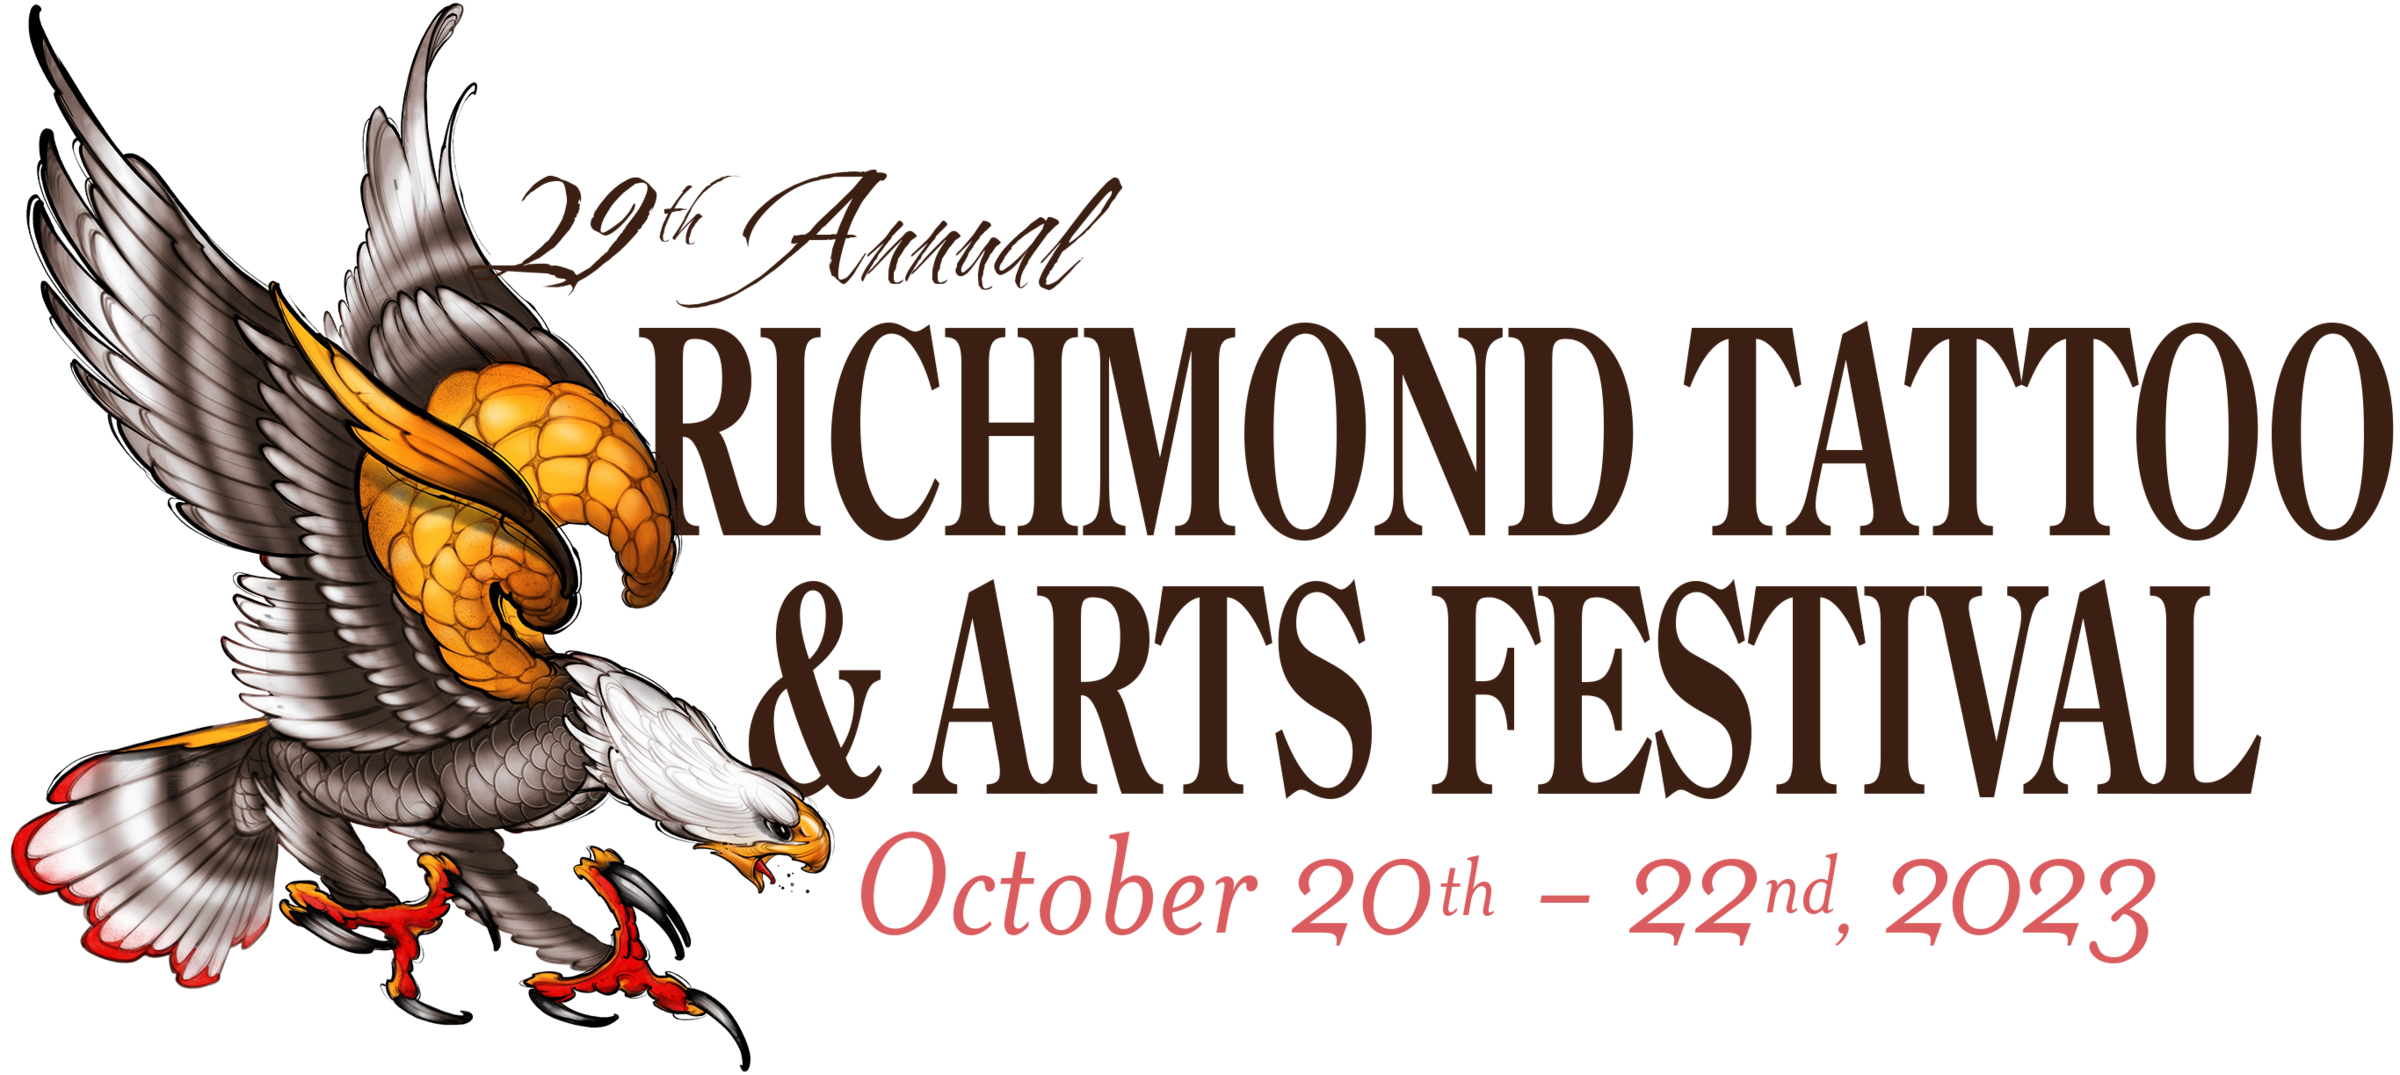 Richmond Tattoo festival